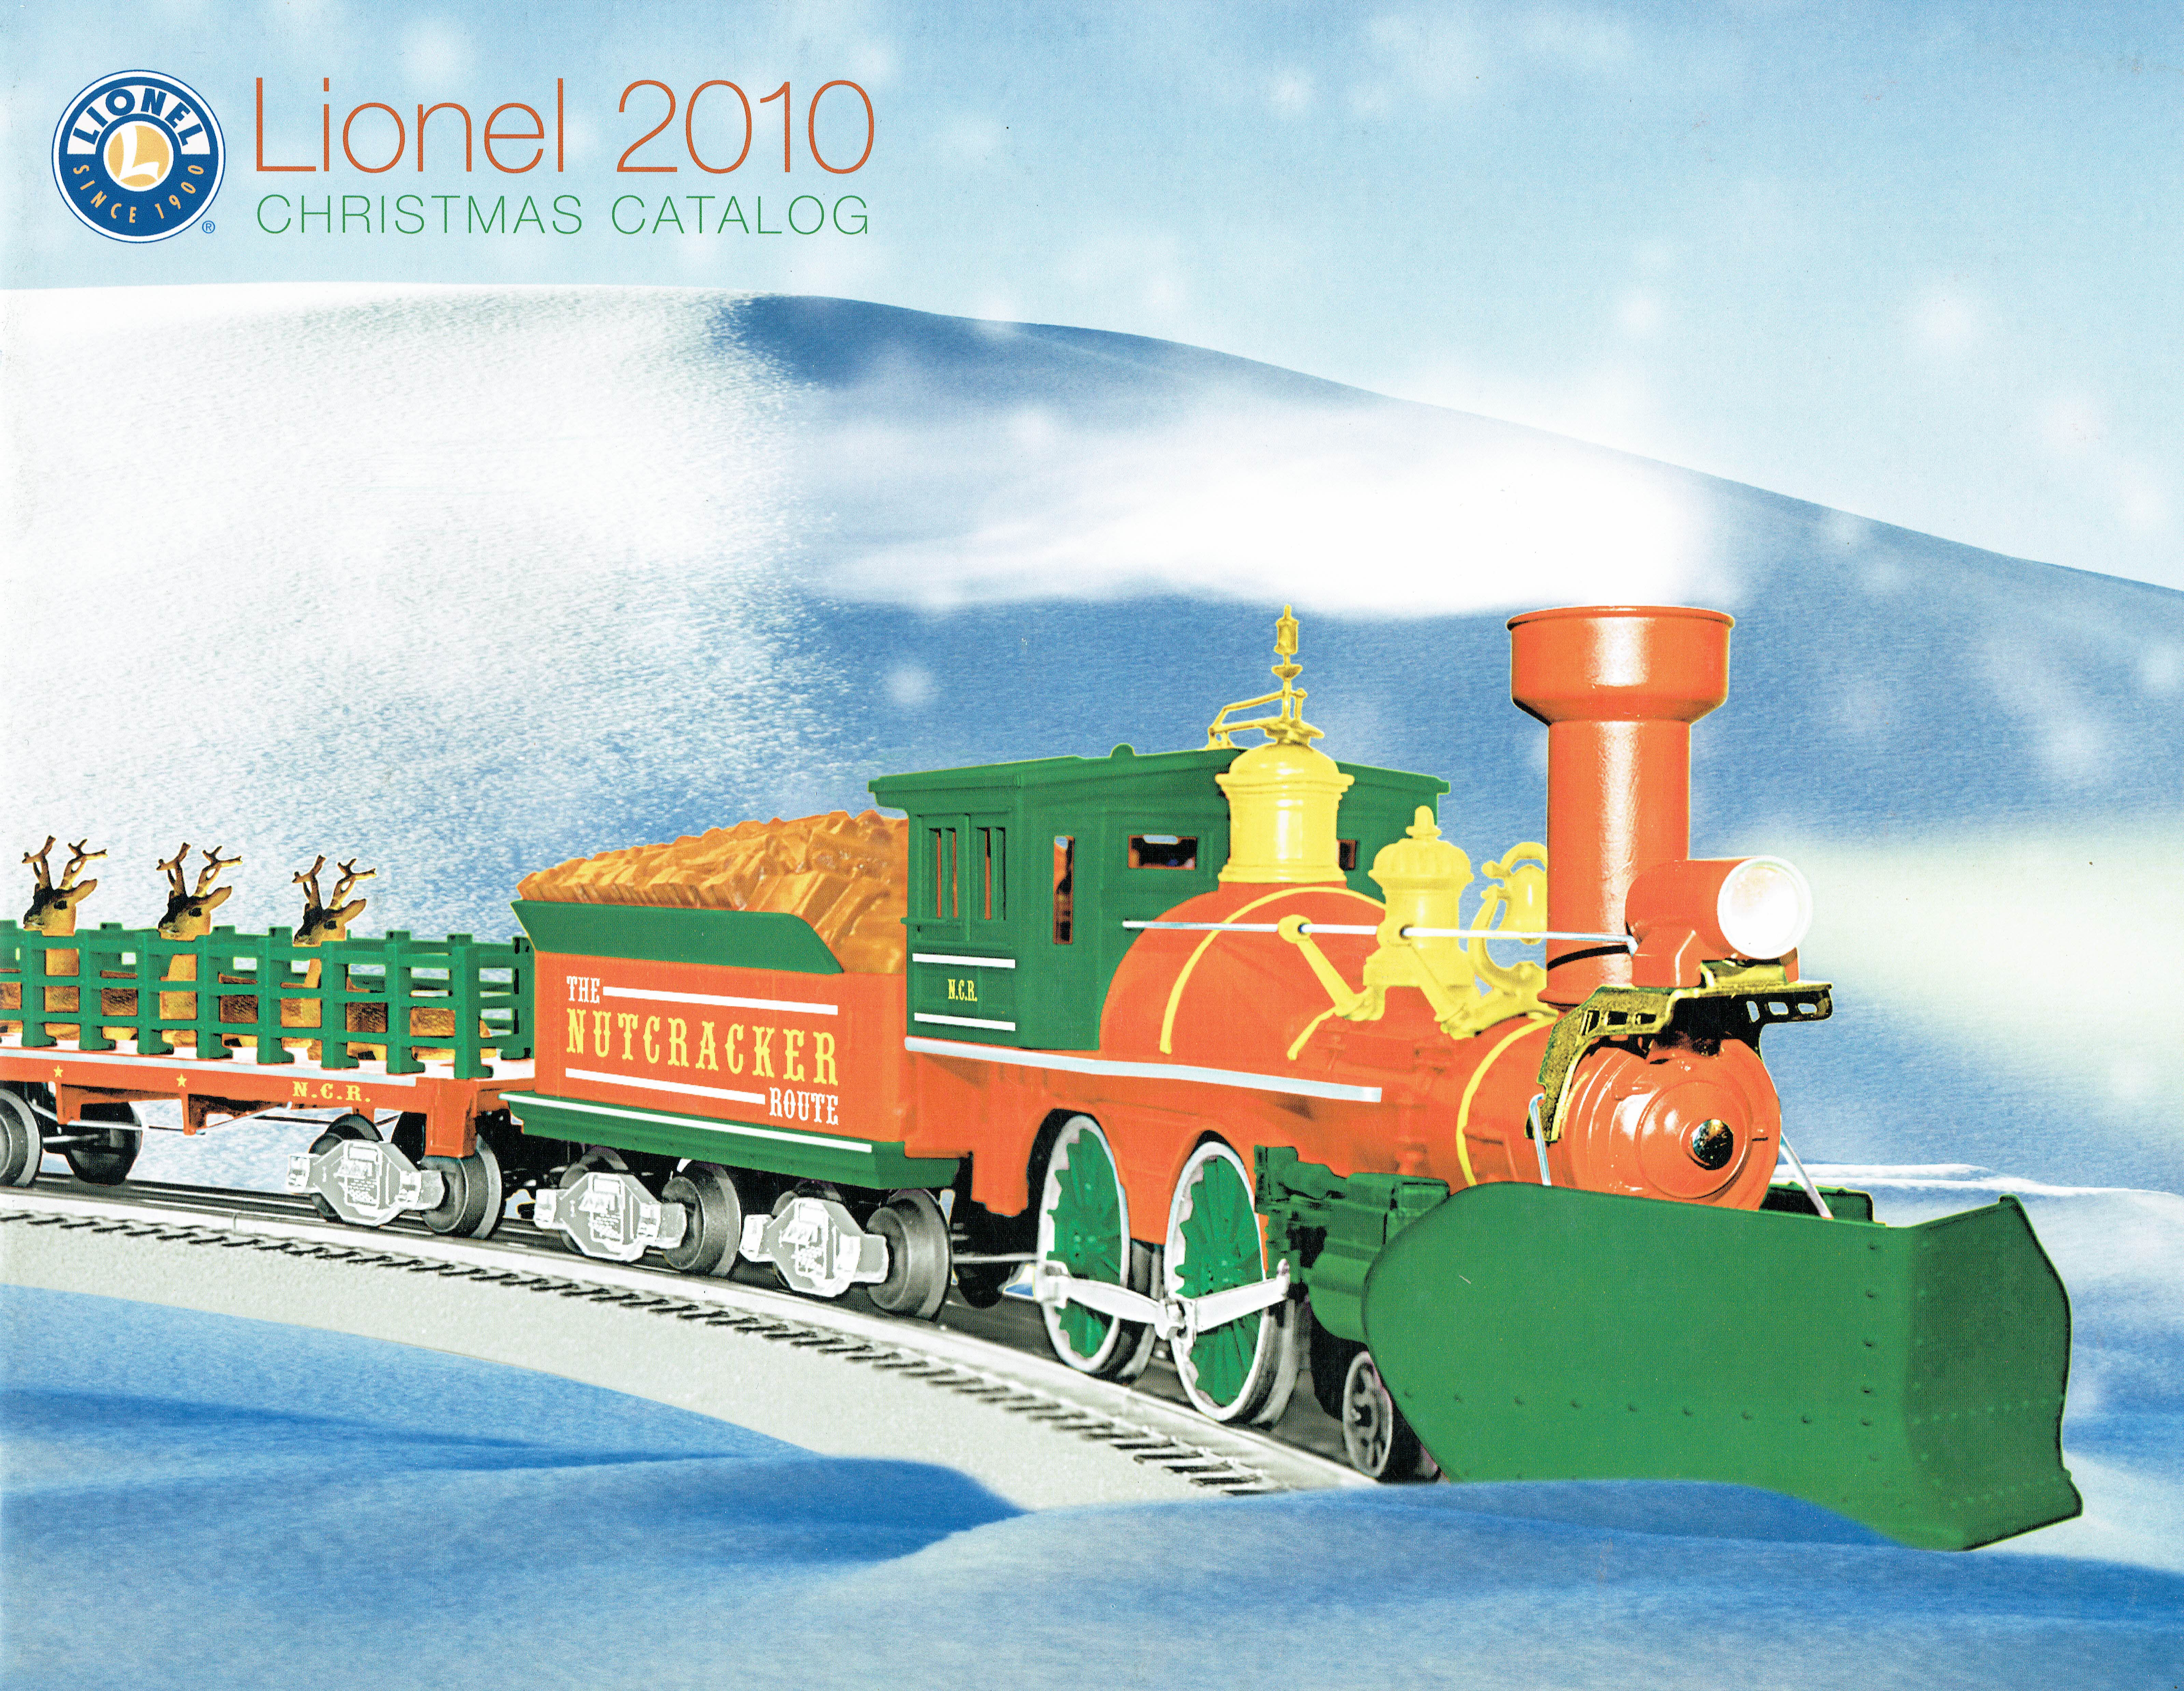 Lionel 2010 Christmas Catalog image